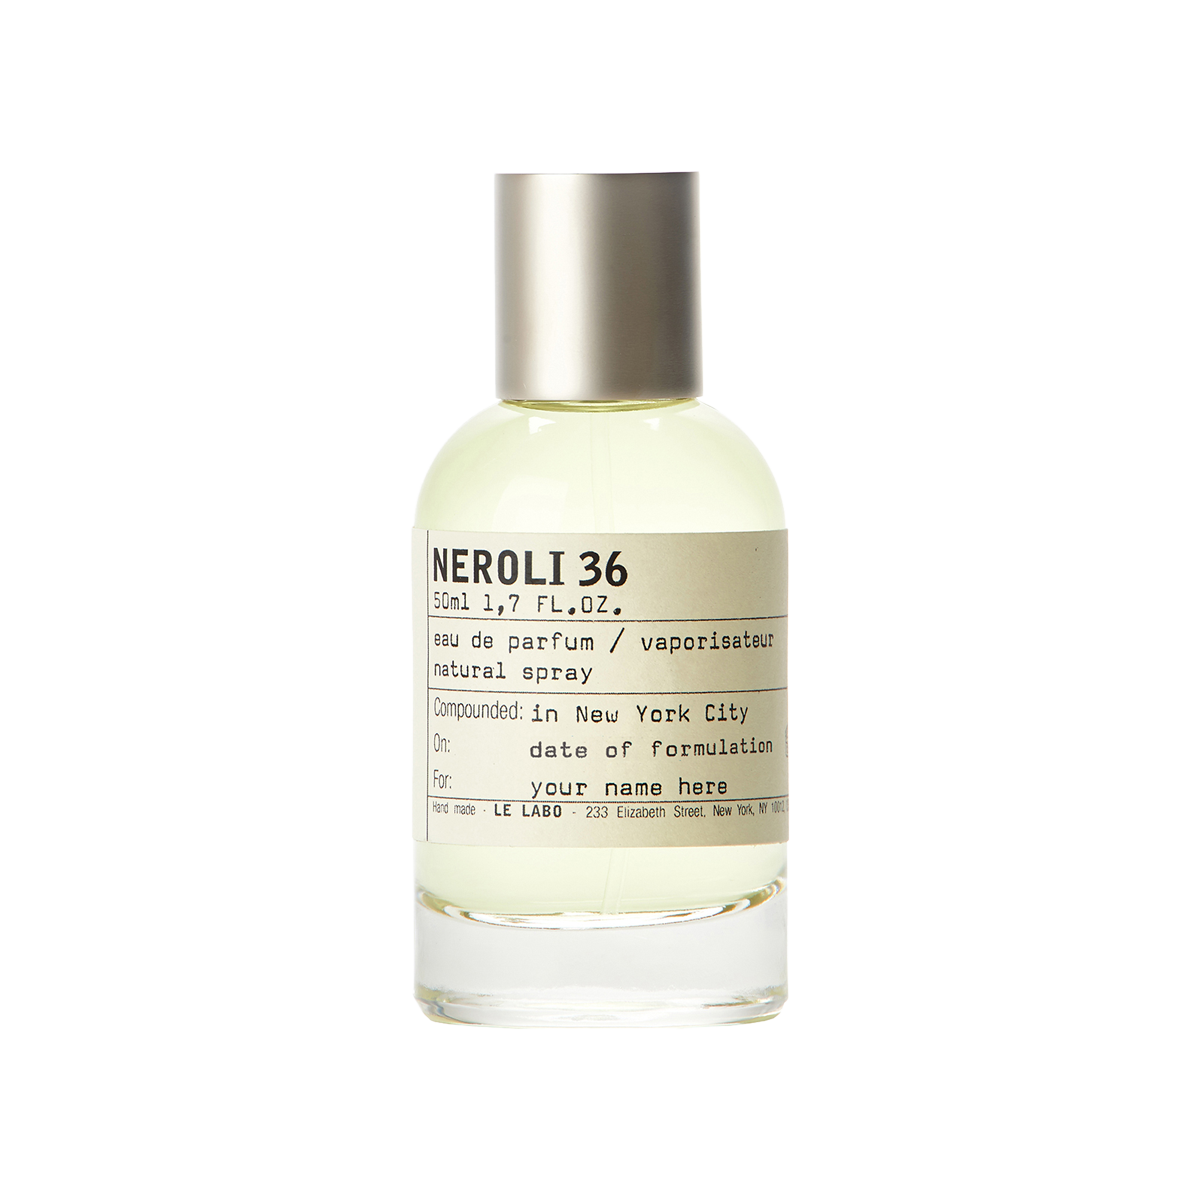 Le Labo fragrances - Neroli 36 Perfume Eau de Parfum